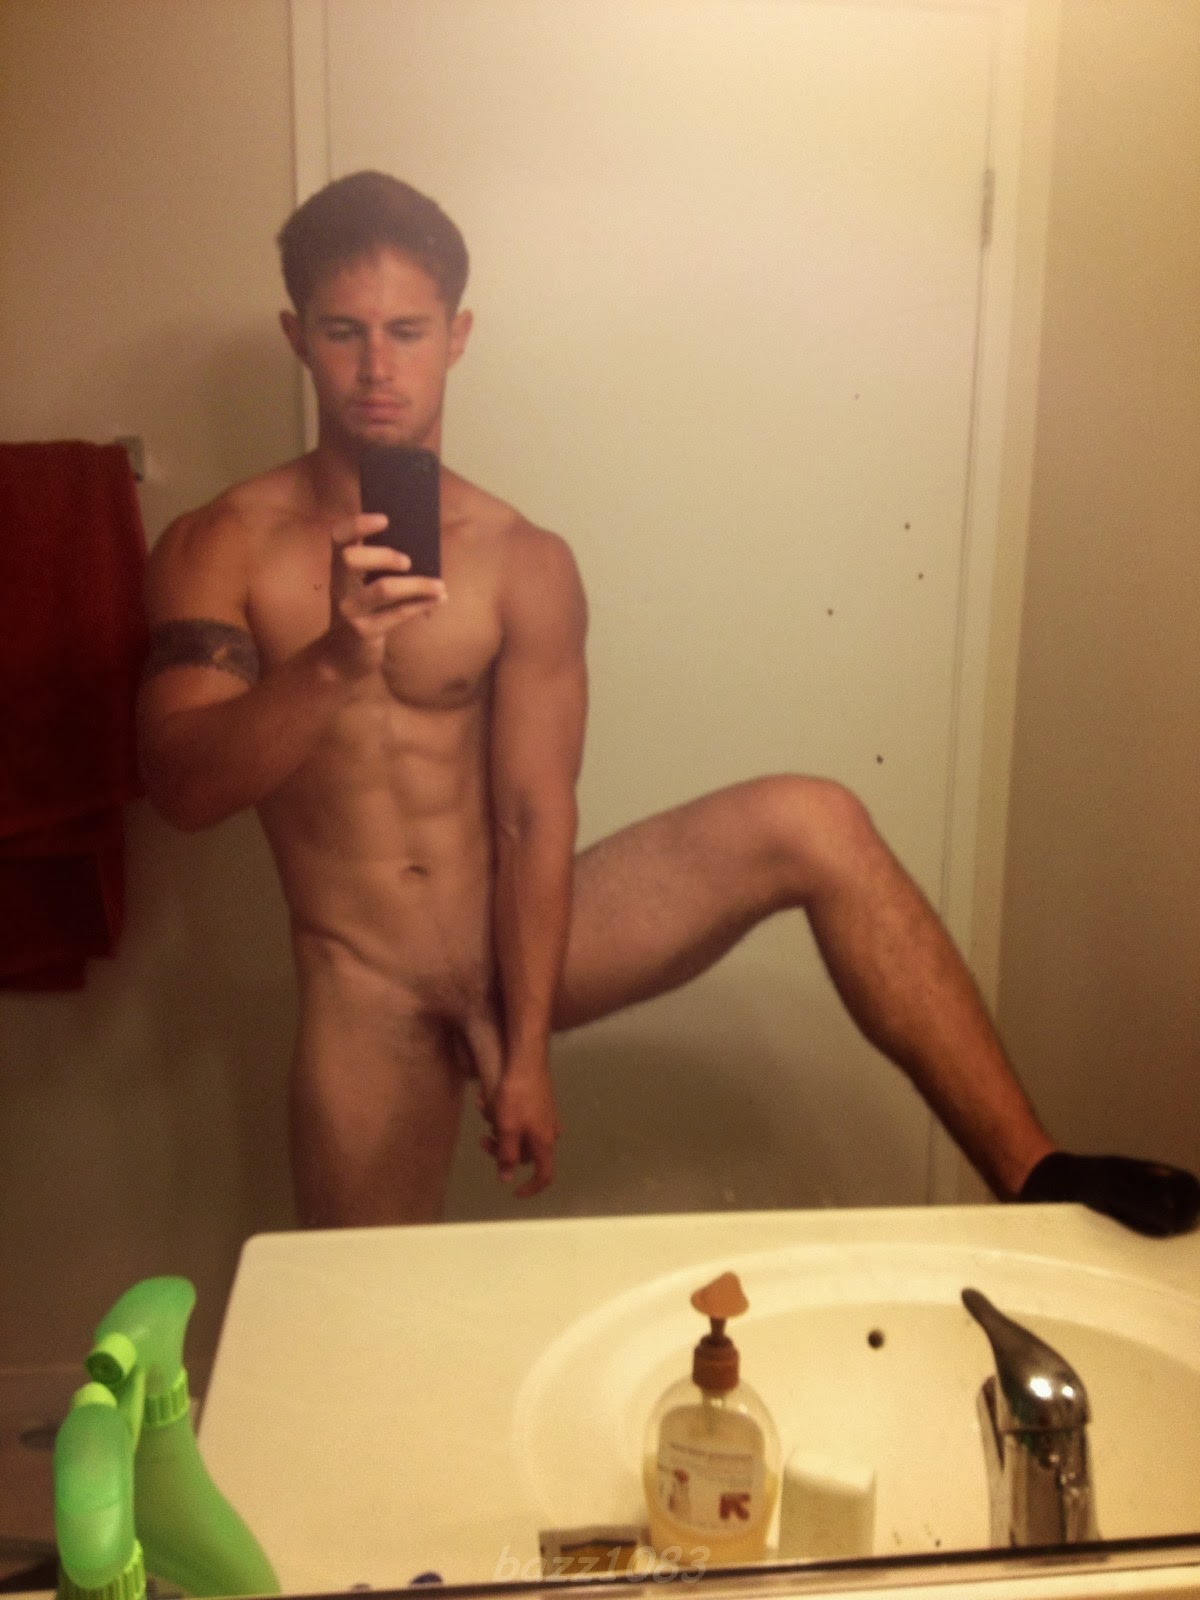 Nude Female Pics From Craigslist - SEX Pics